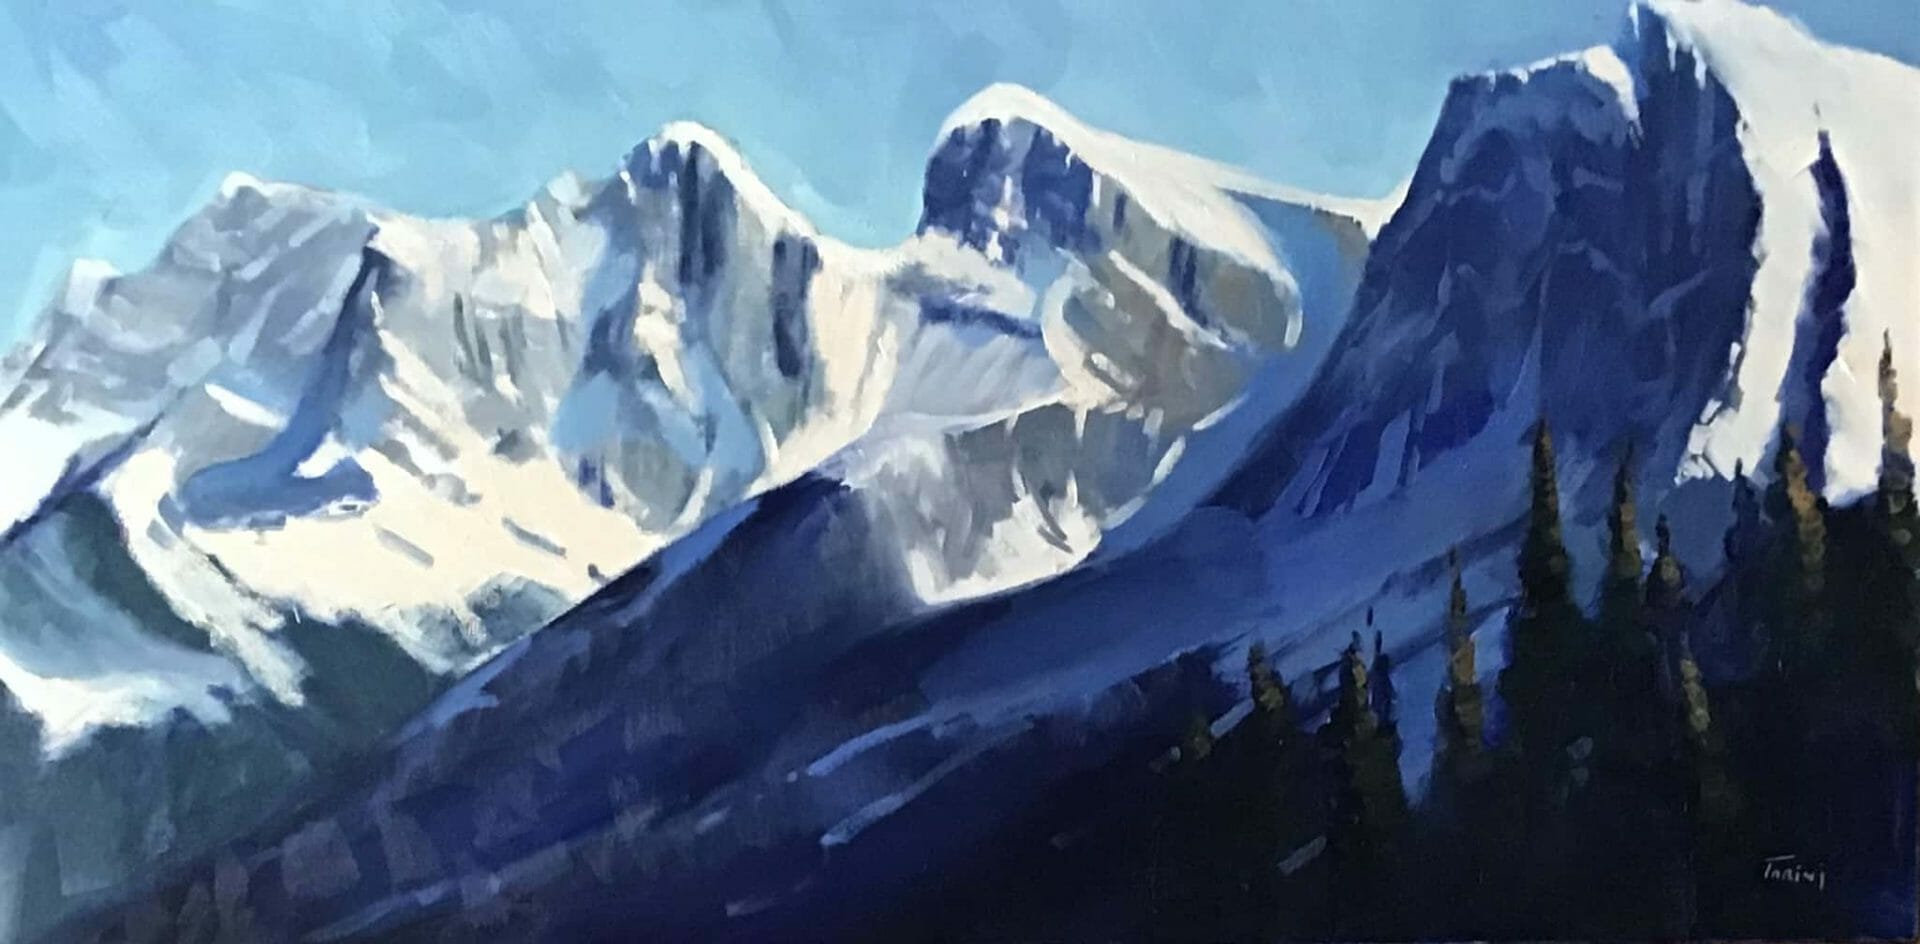 Turquoise Sky - Canadian Original Artwork For Sale by Mary Ann Tarini Hews - Calgary, AB Local Artist - Mountains